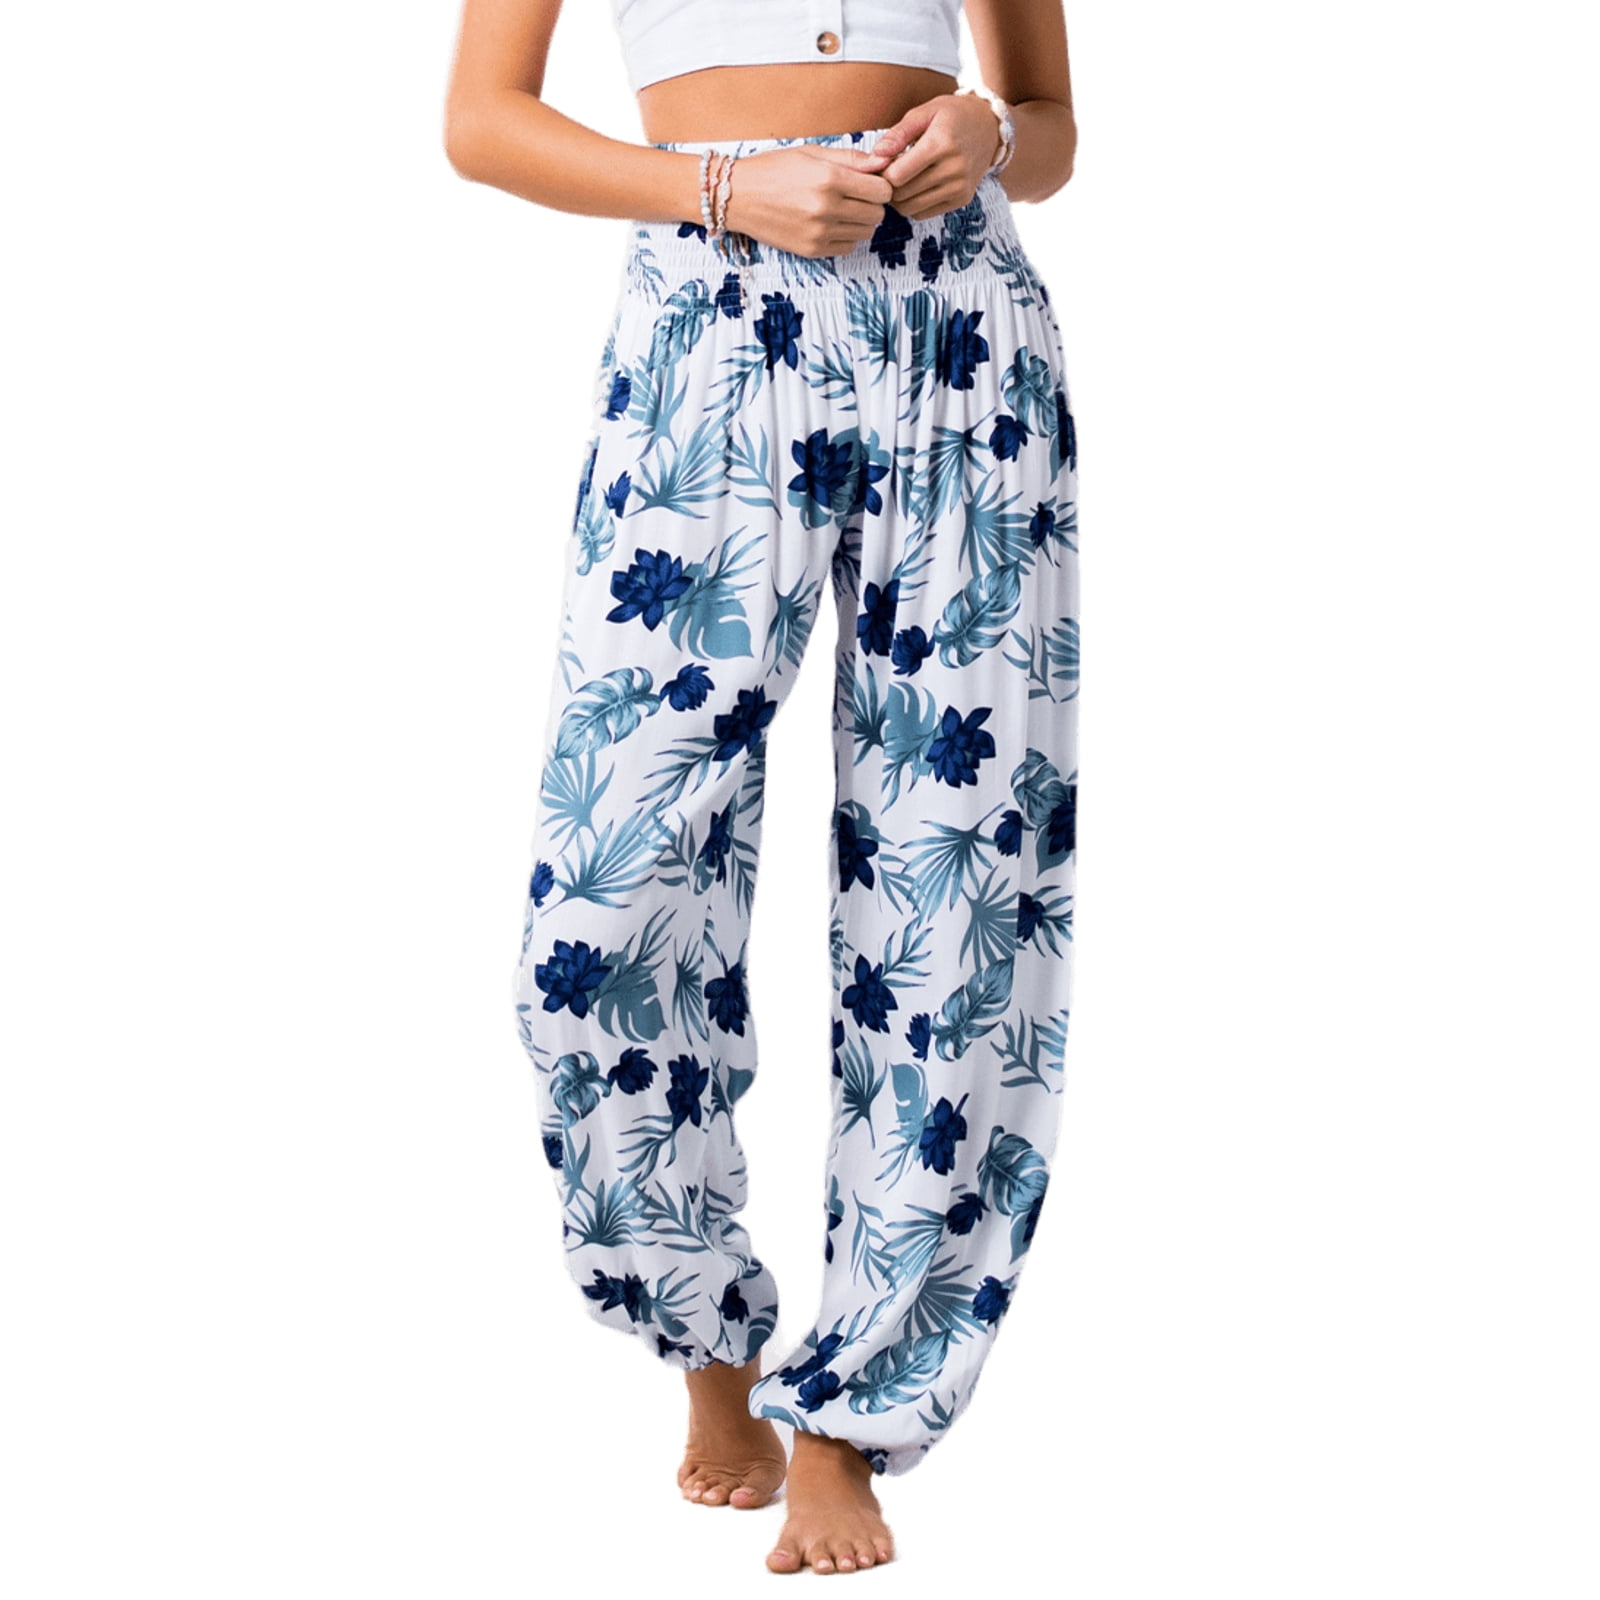 Lotus and Luna Harem Pants Thai Pants for Women Perfect for Beach & Lounge,  Hanalei Harem Pants S/M